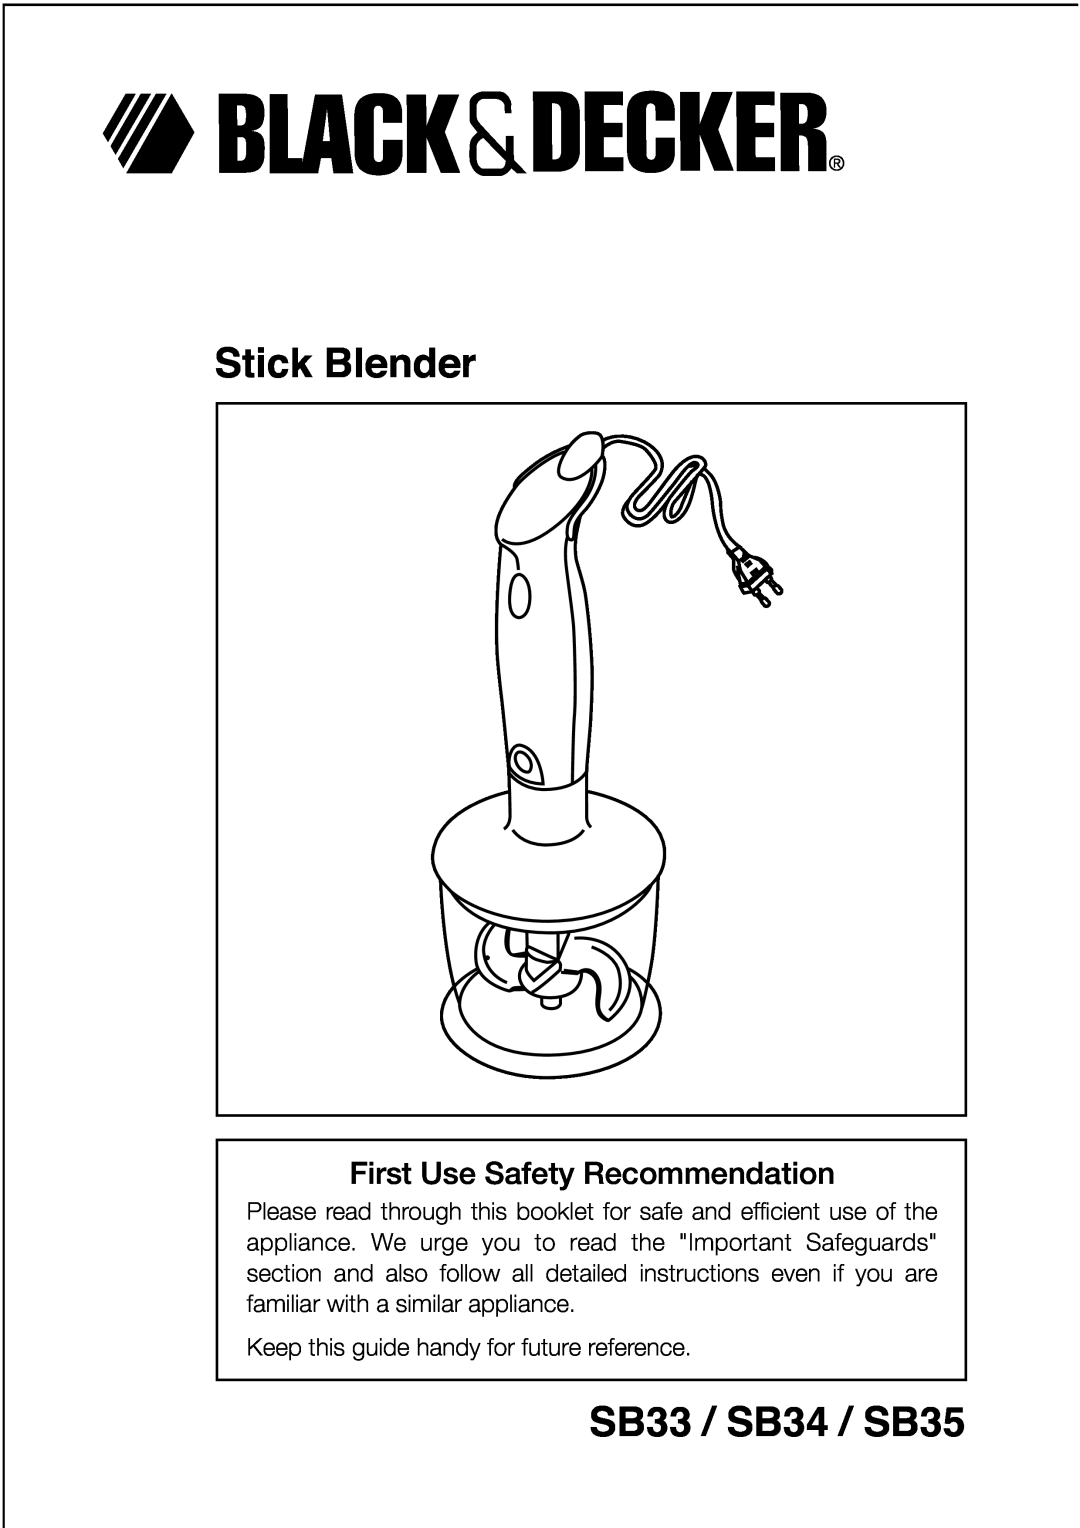 Black & Decker manual Stick Blender, SB33 / SB34 / SB35, First Use Safety Recommendation 